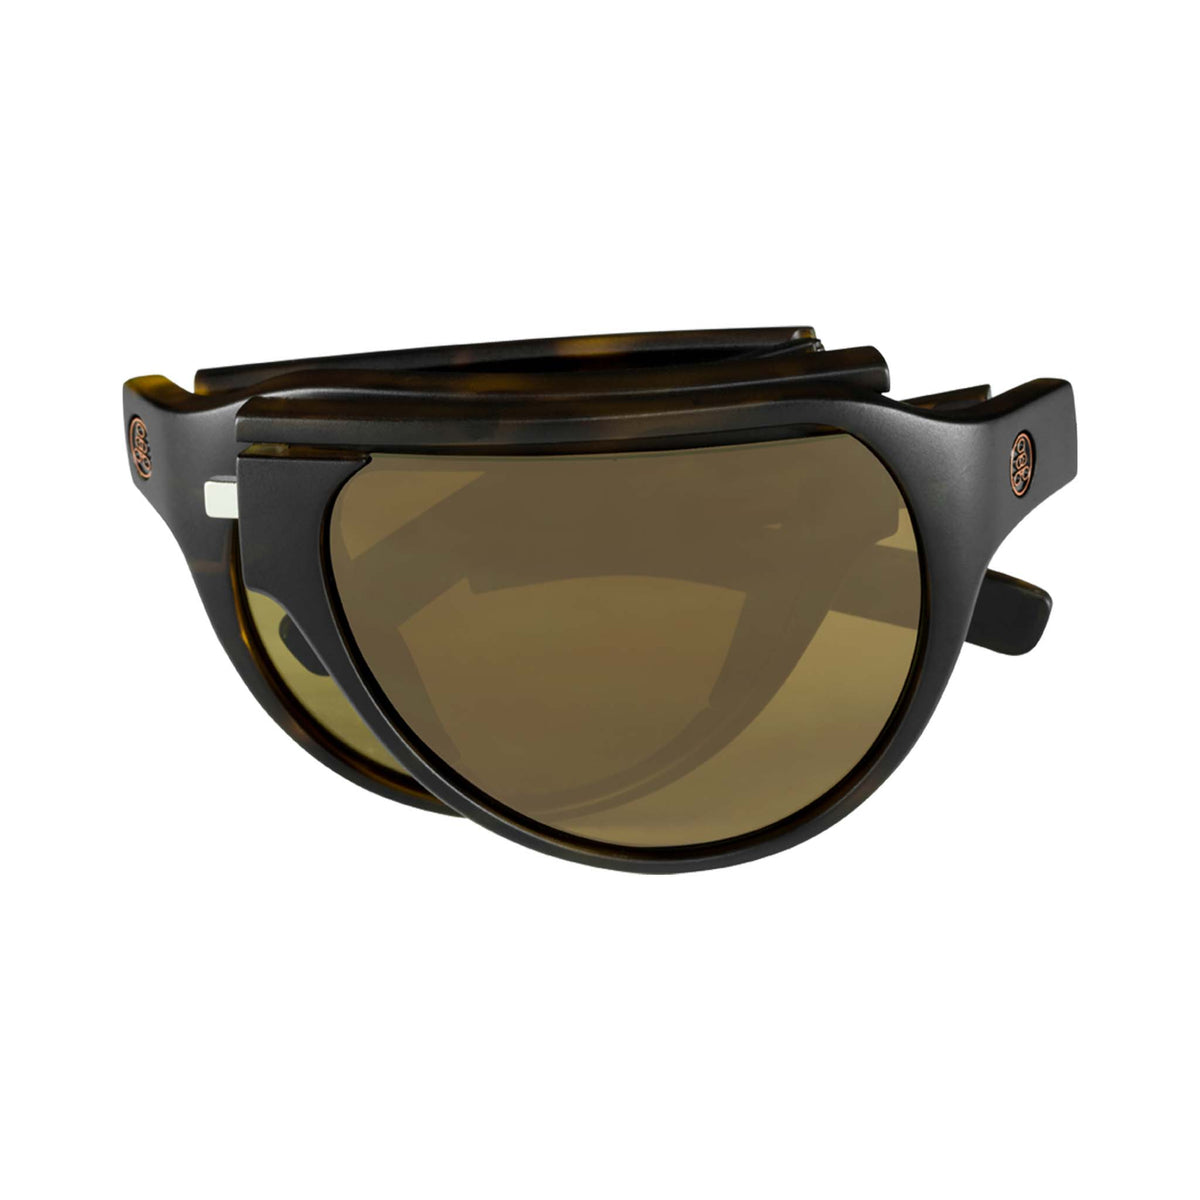 Popticals, Premium Compact Sunglasses, PopAir, 300010-CUNS, Standard Sunglasses, Matte Tortoise Frame, Brown Lenses, Compact View